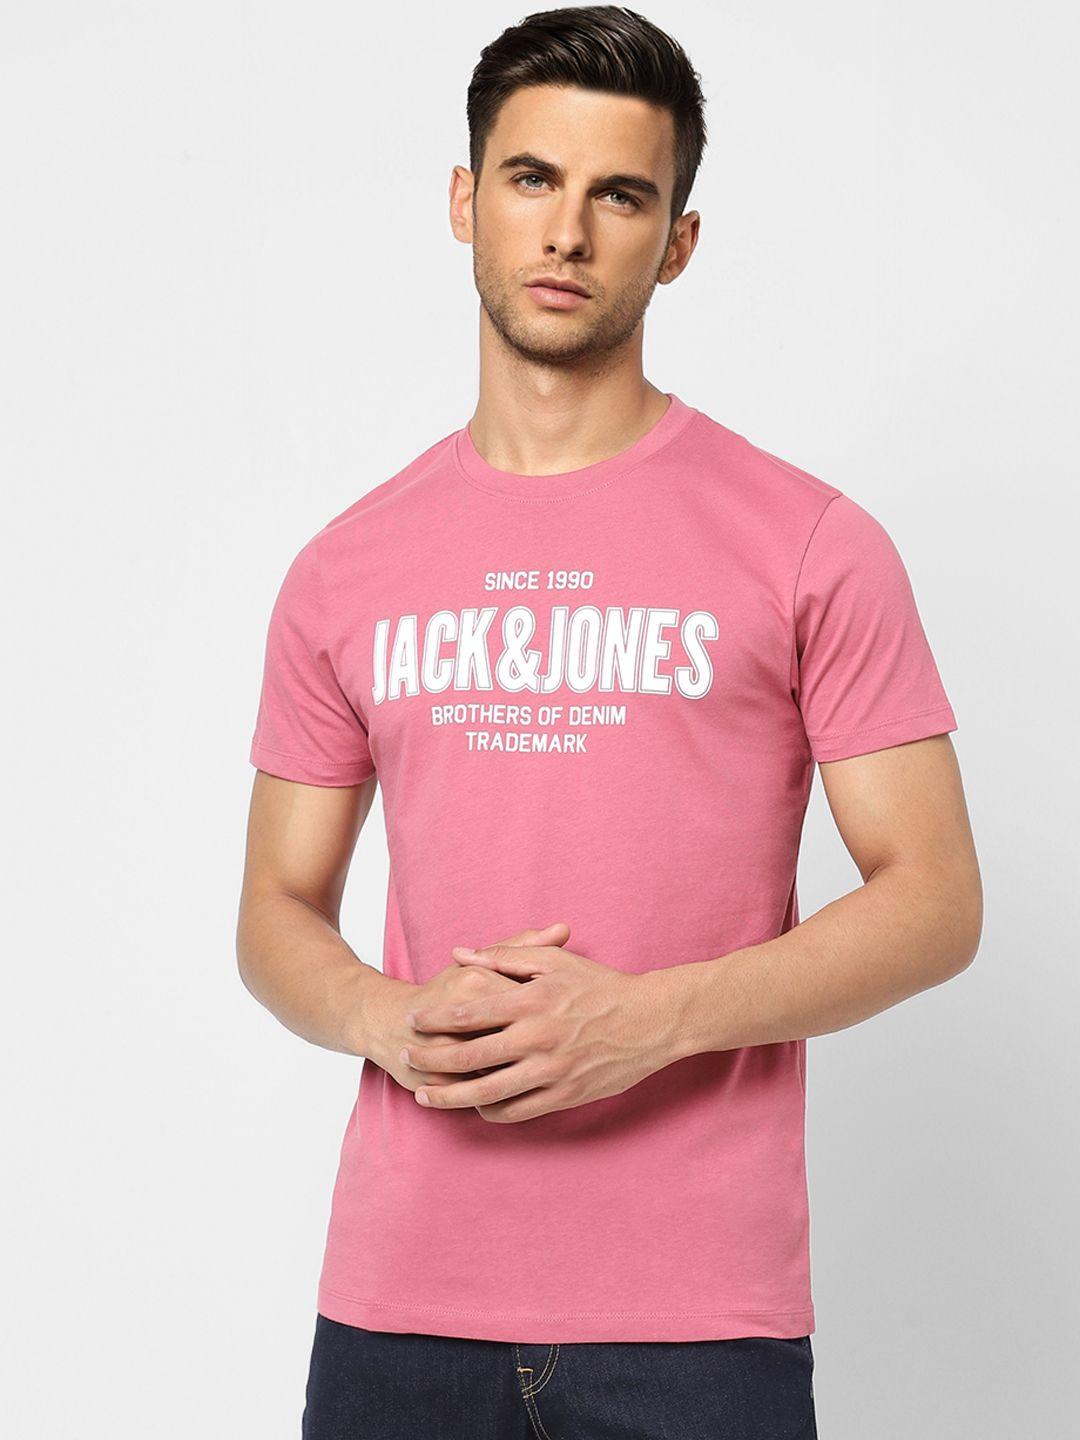 jack & jones men pink & white brand logo printed pure cotton slim fit t-shirt